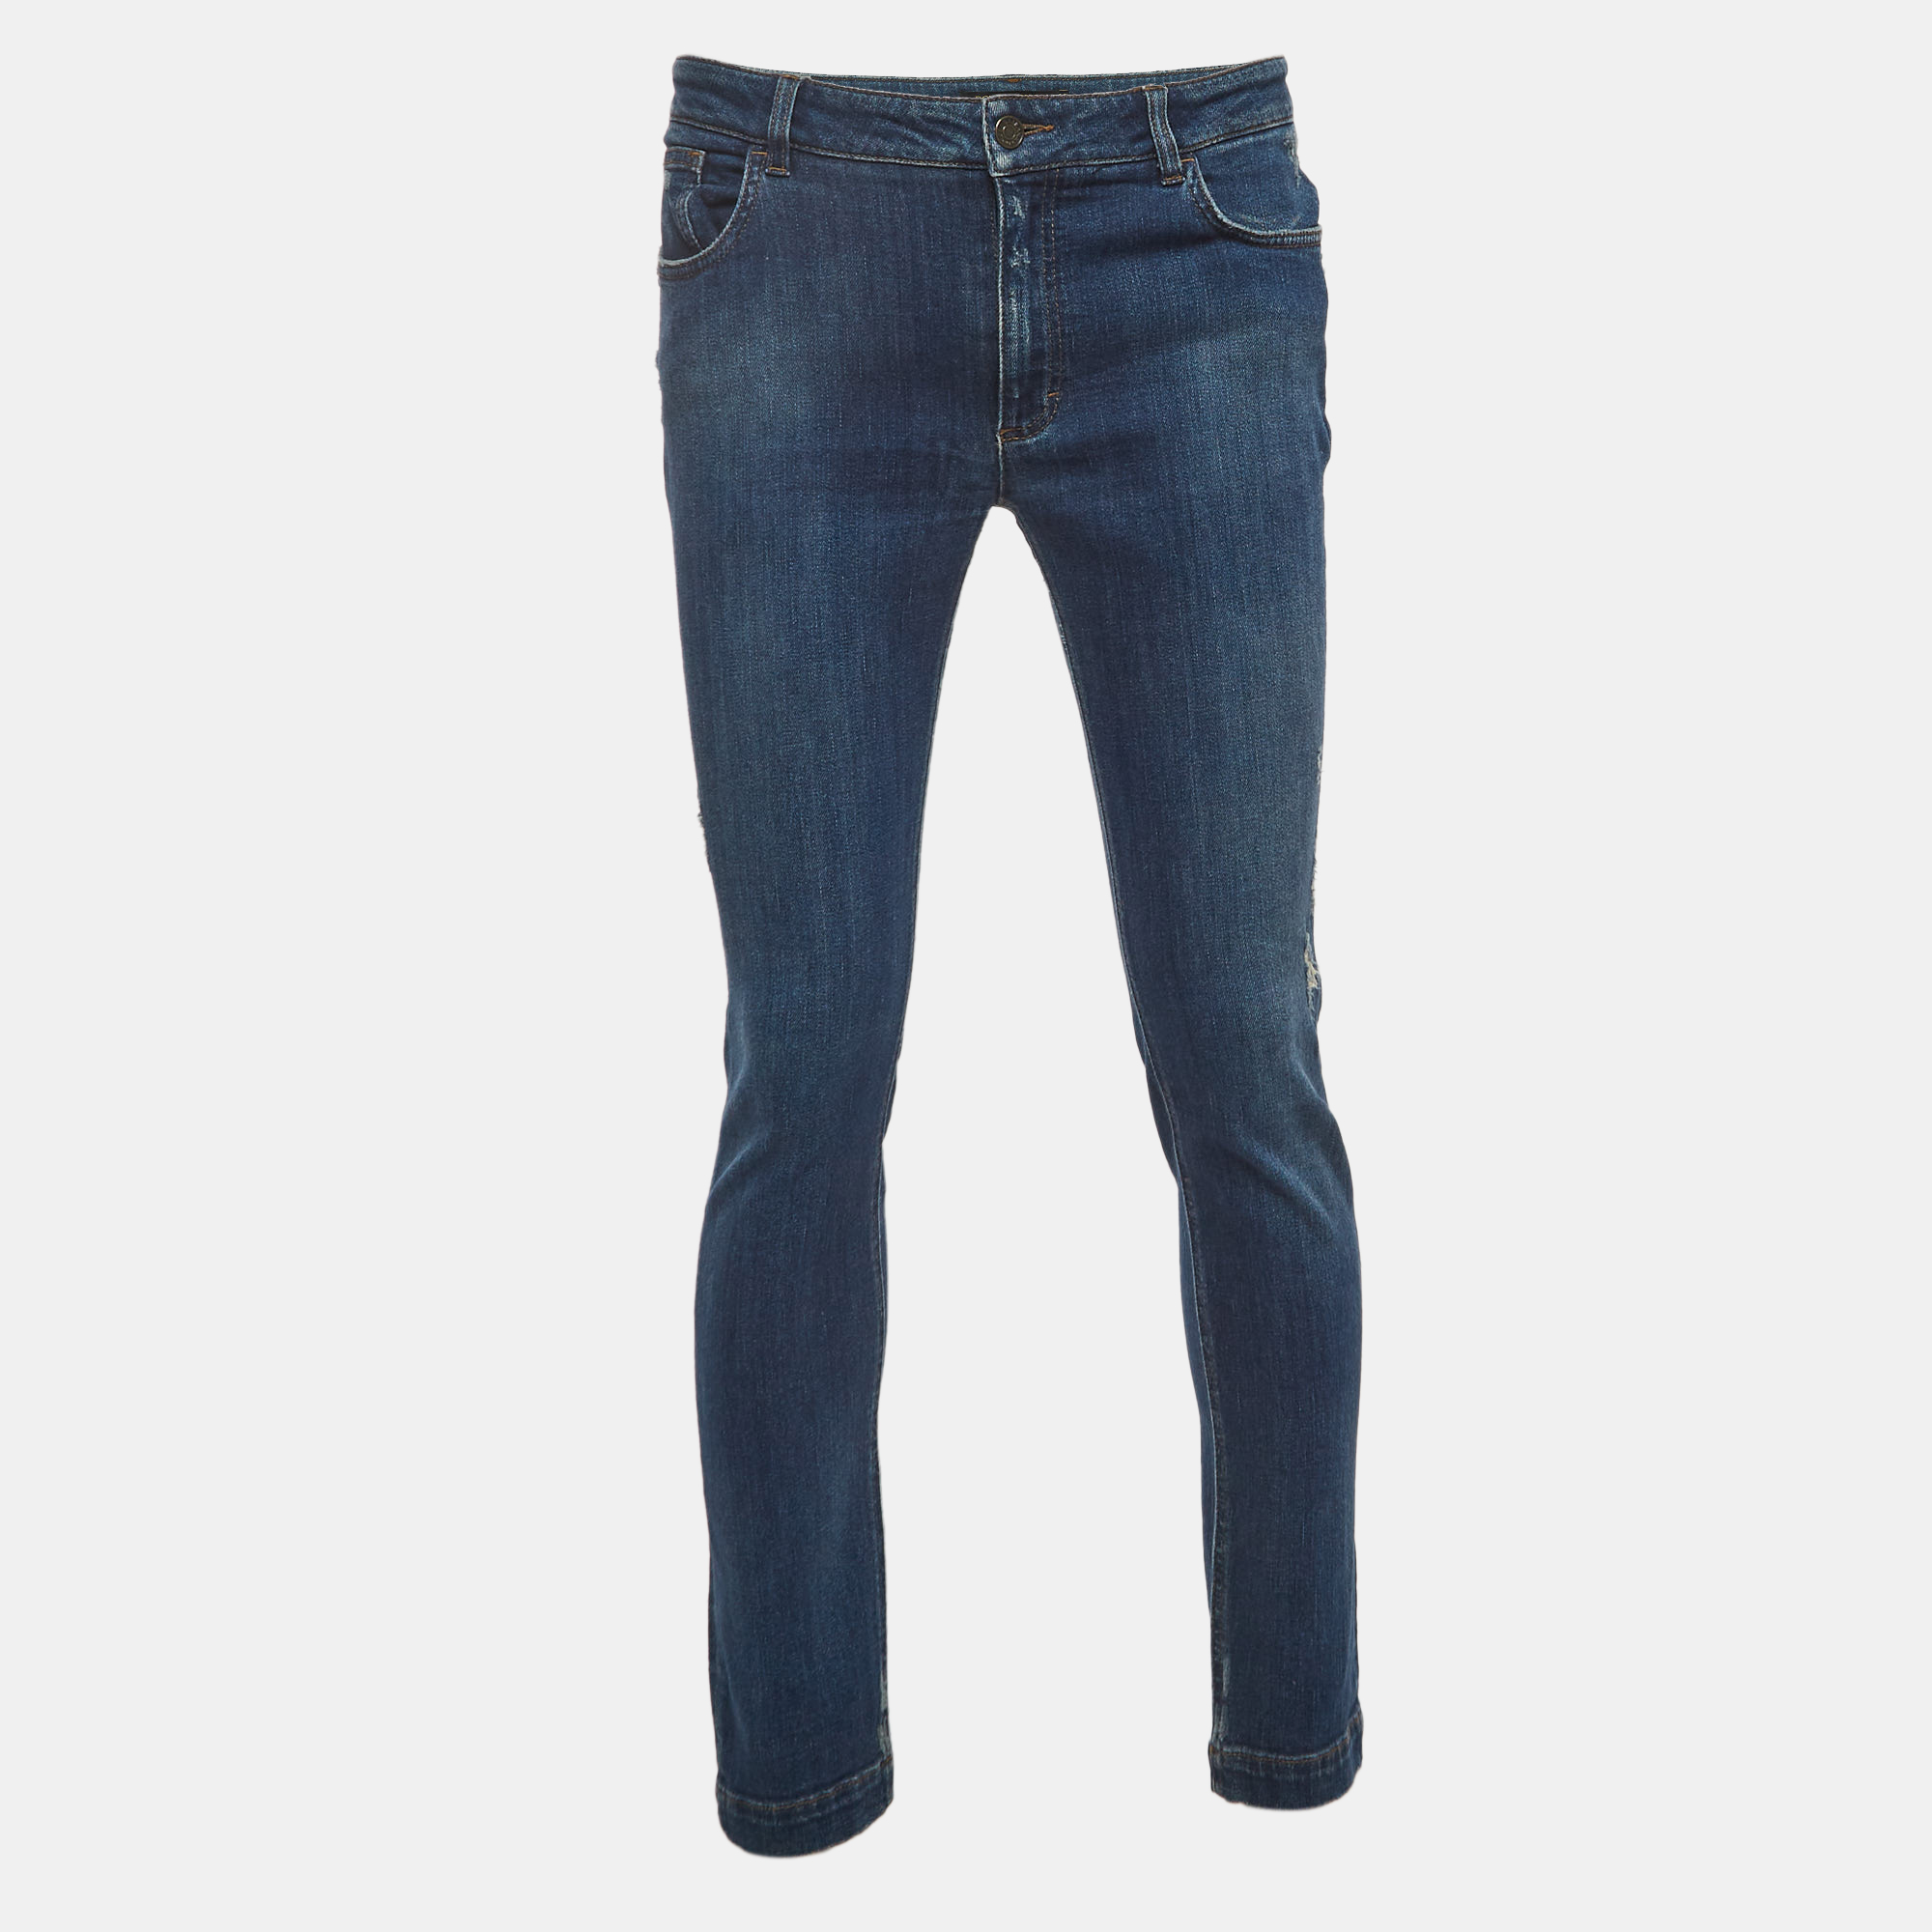 Dolce & gabbana blue denim kate jeans xl waist 34"